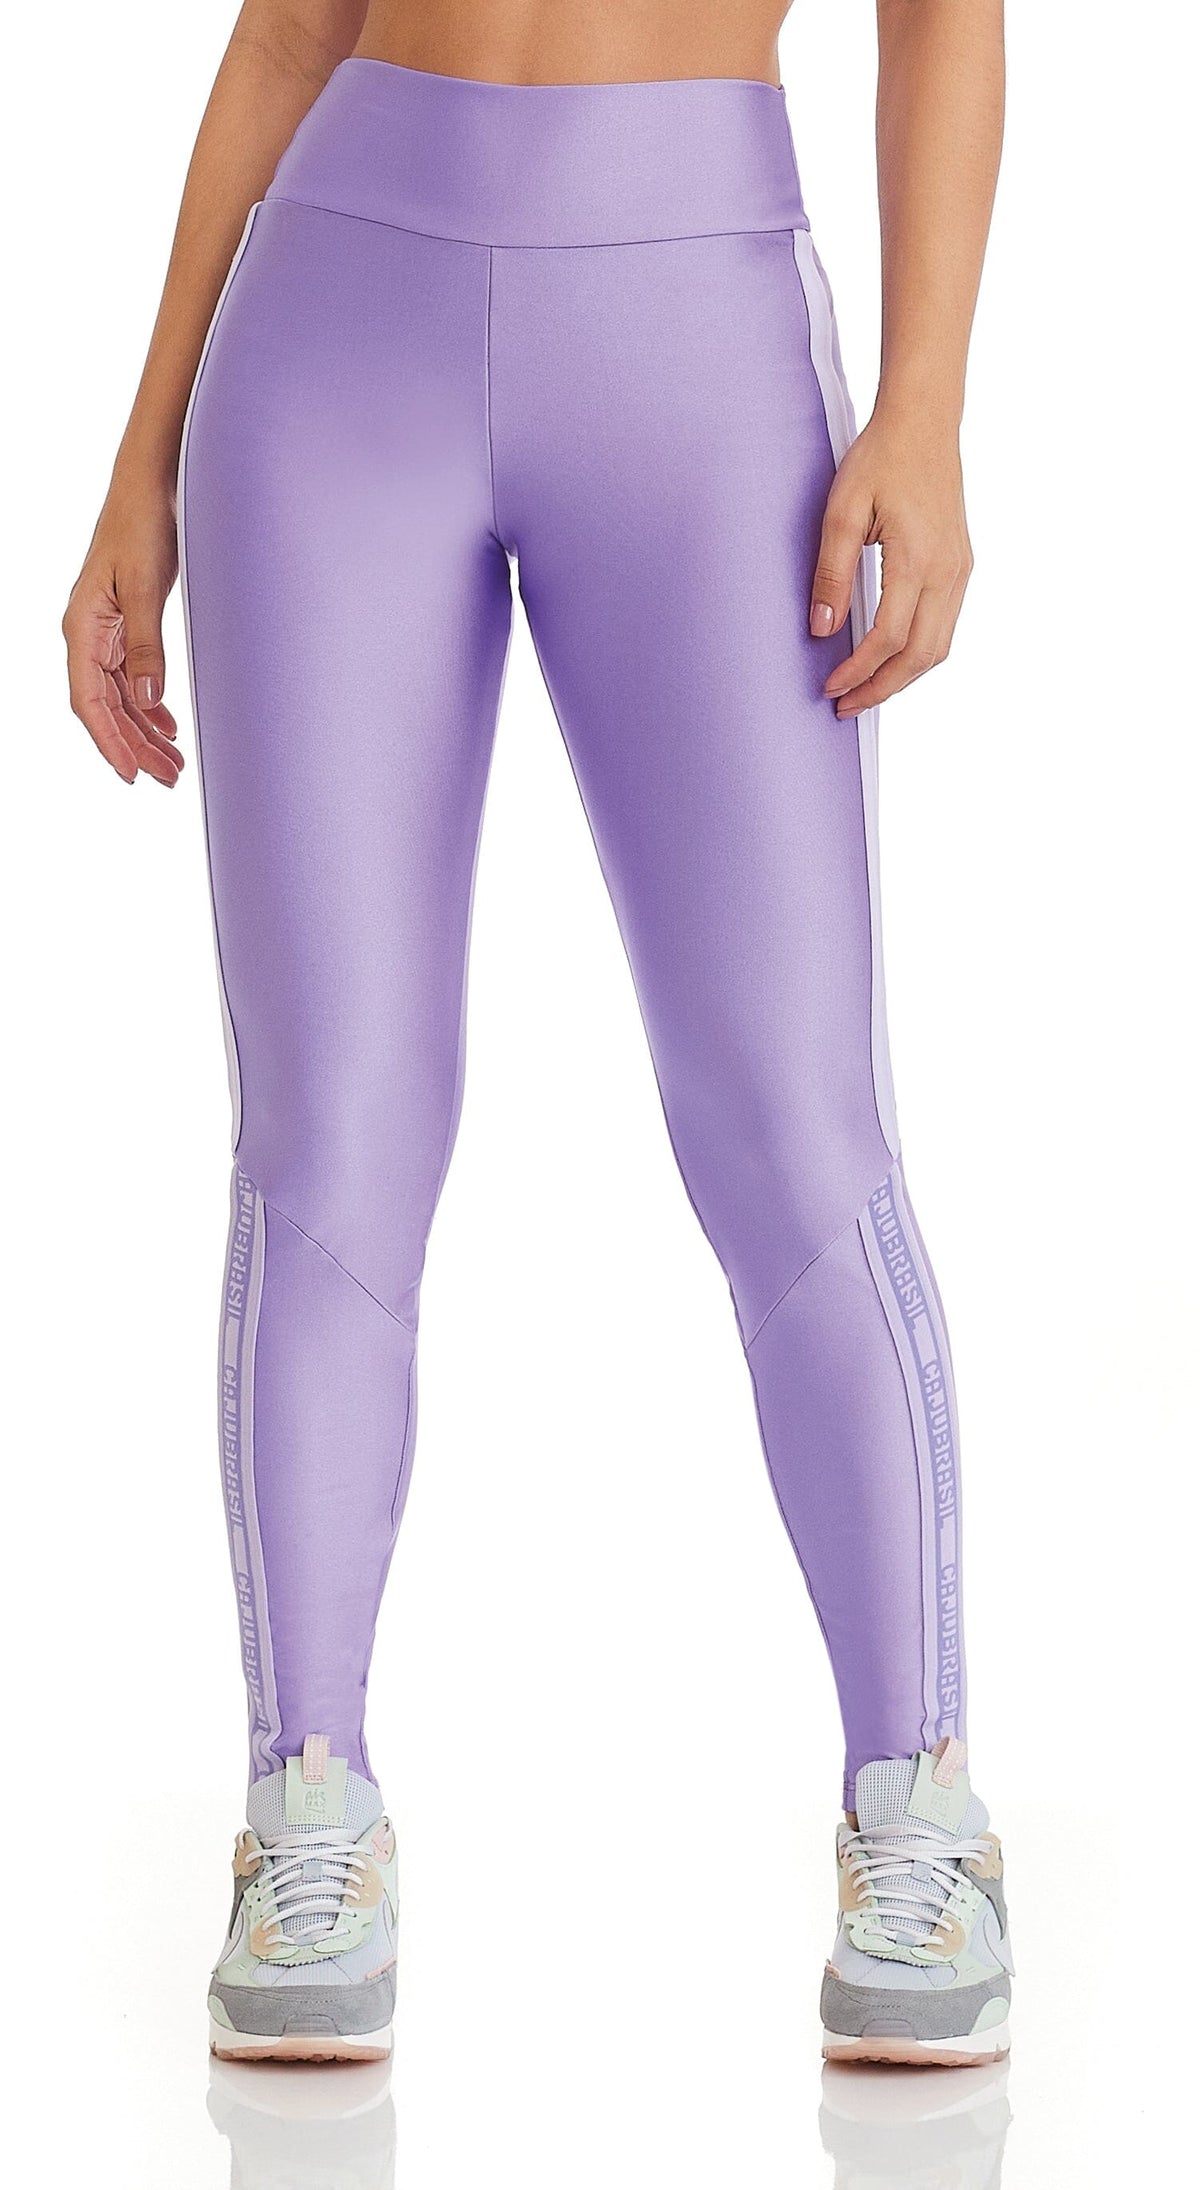 Legging Zen - Lavender Purple